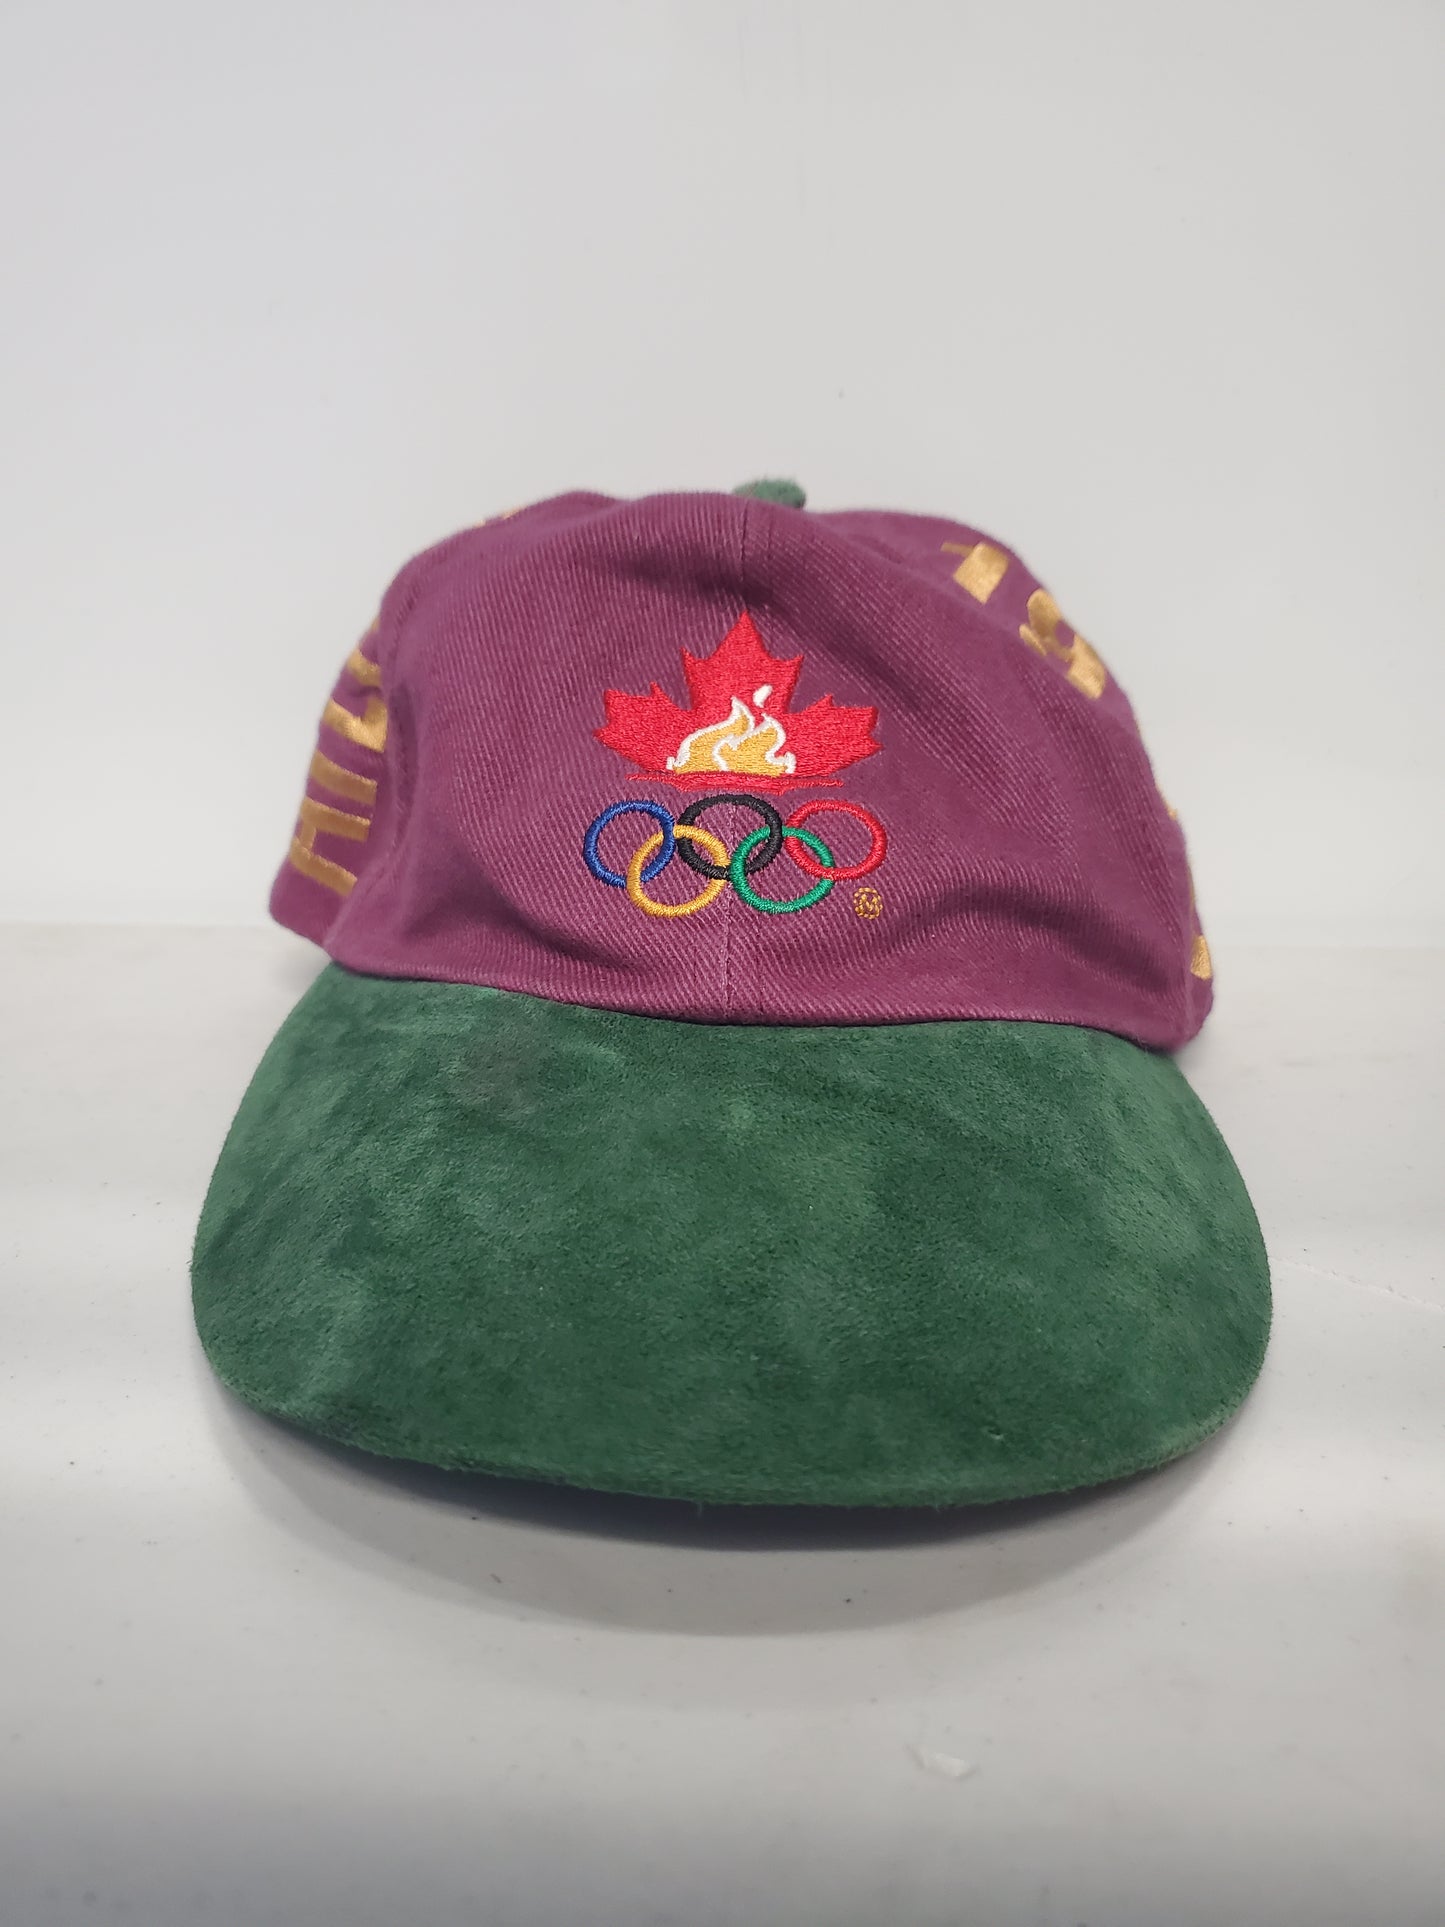 Mens Vintage 1996 Atlanta Olympics Strapback Hat